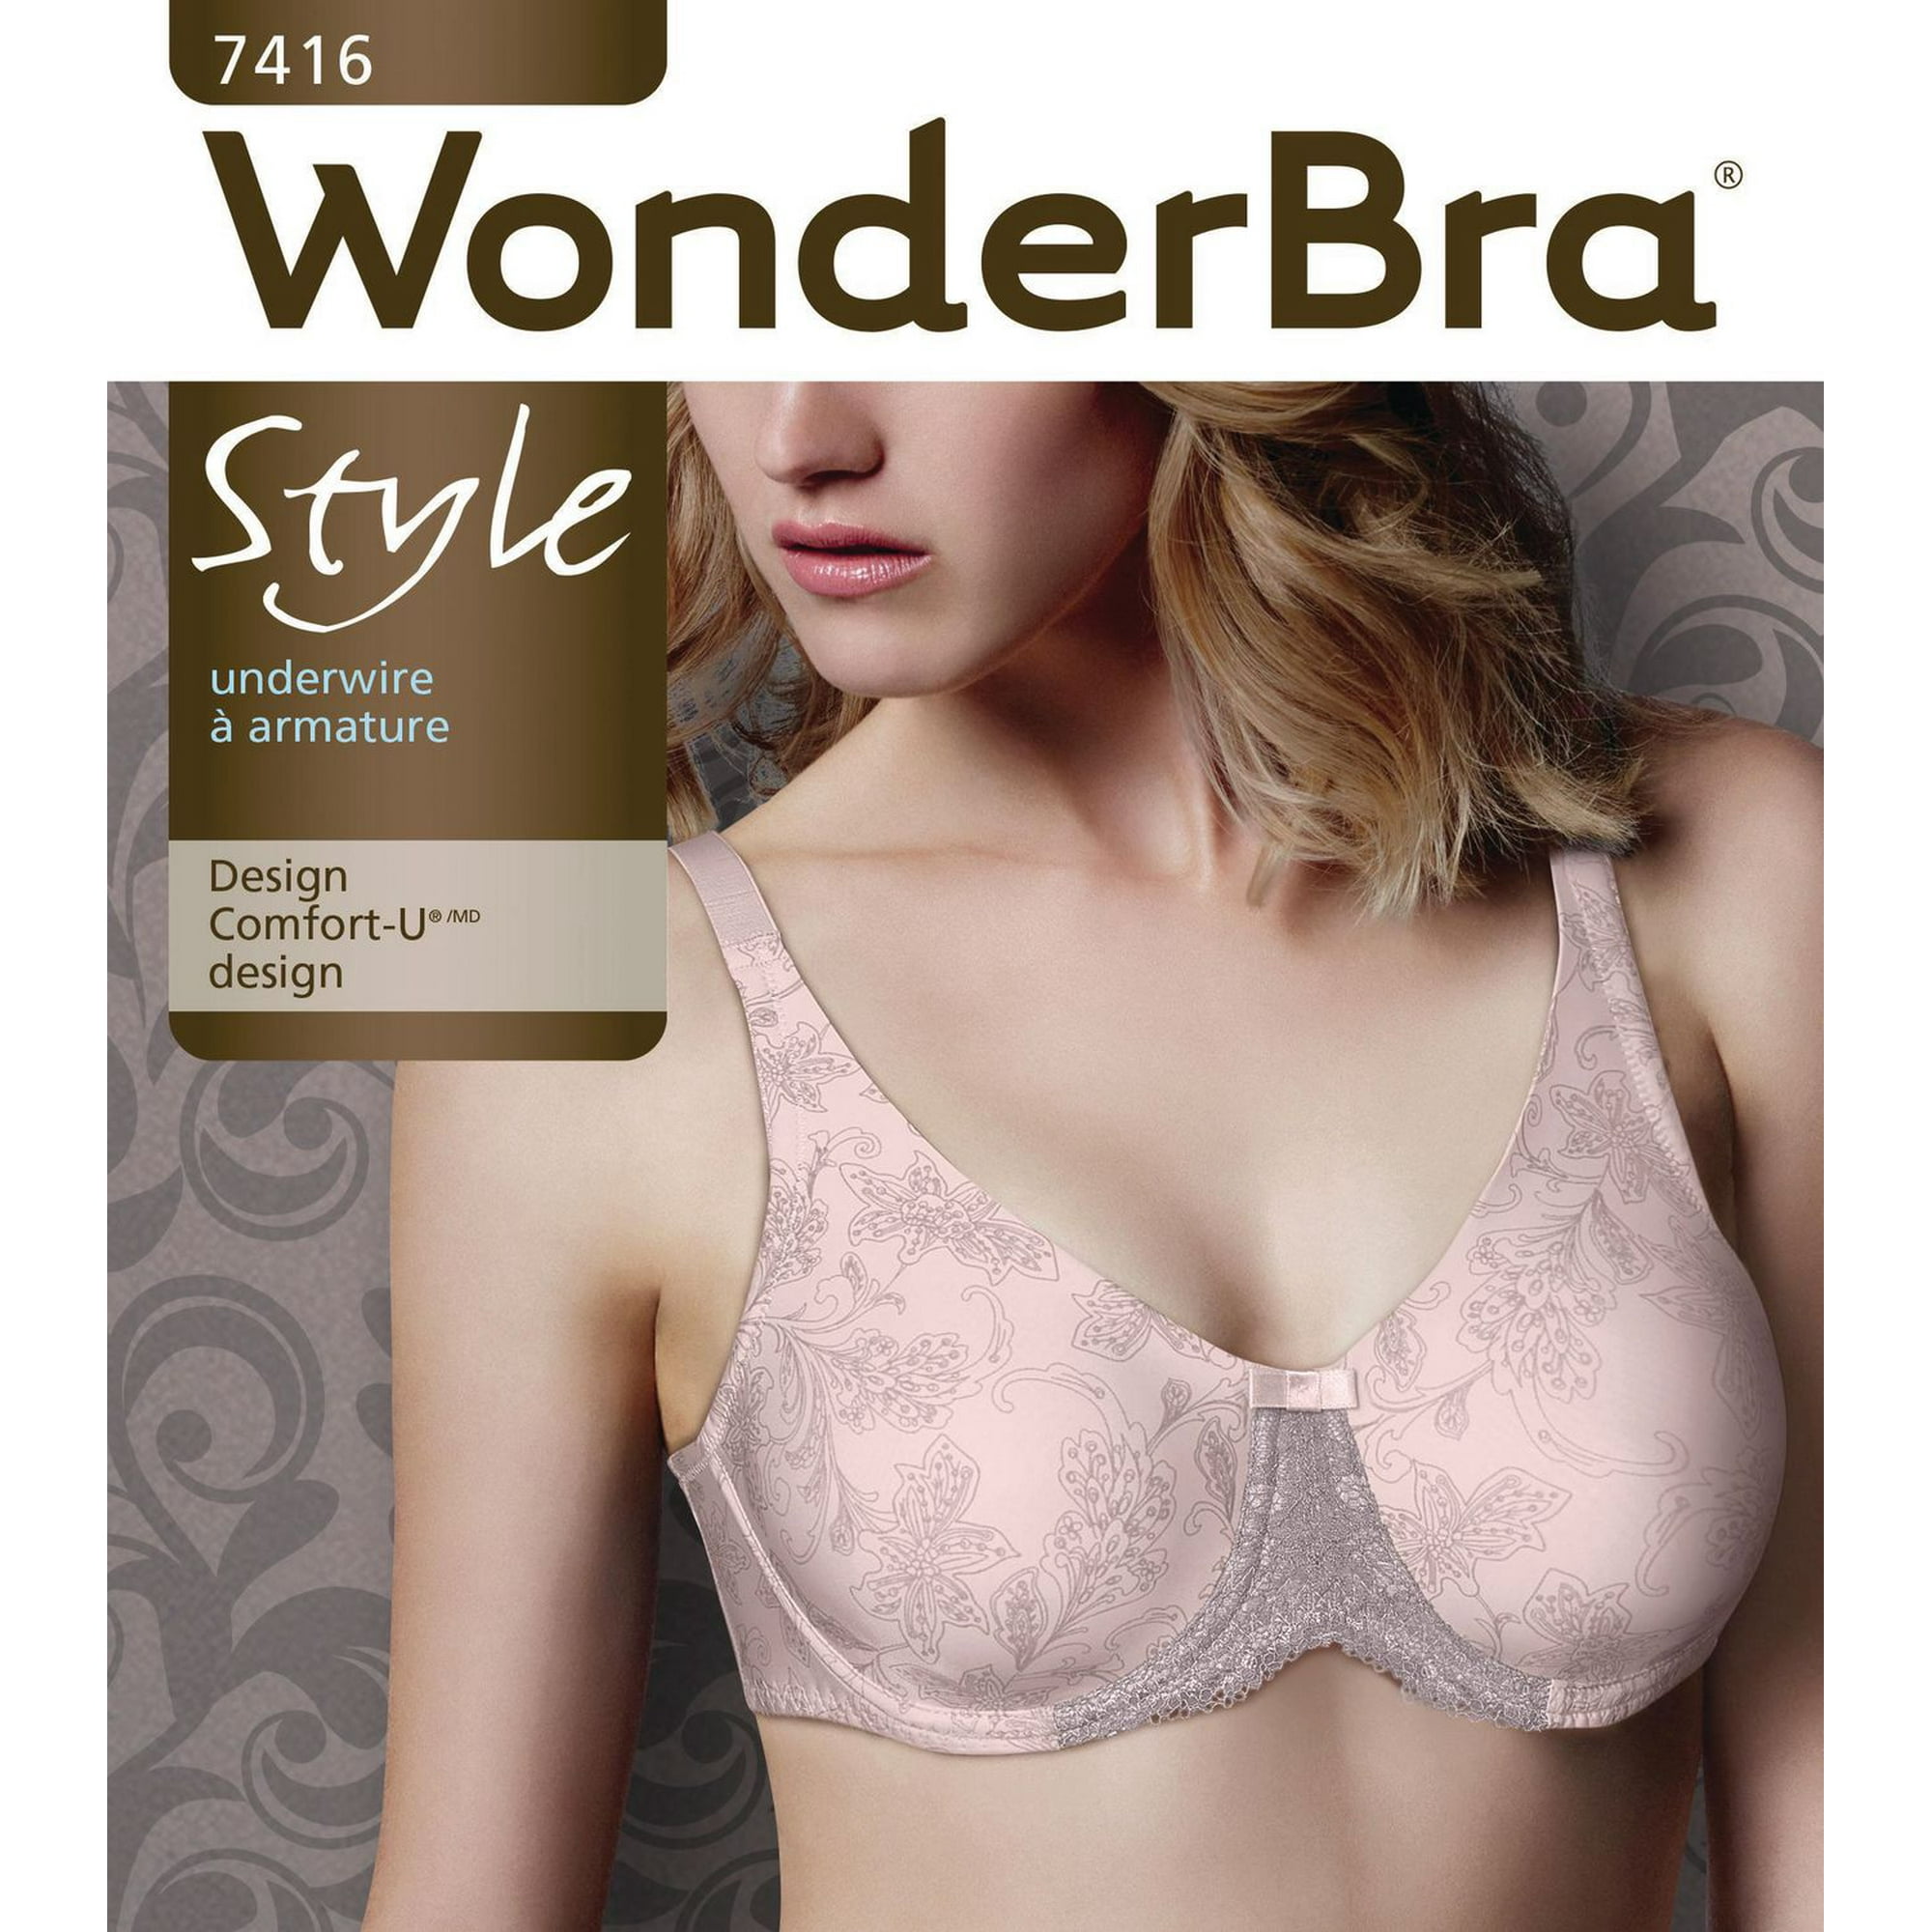 WonderBra Molded Print Comfort-U Udrwire Bra, Sizes 34B to 40DD